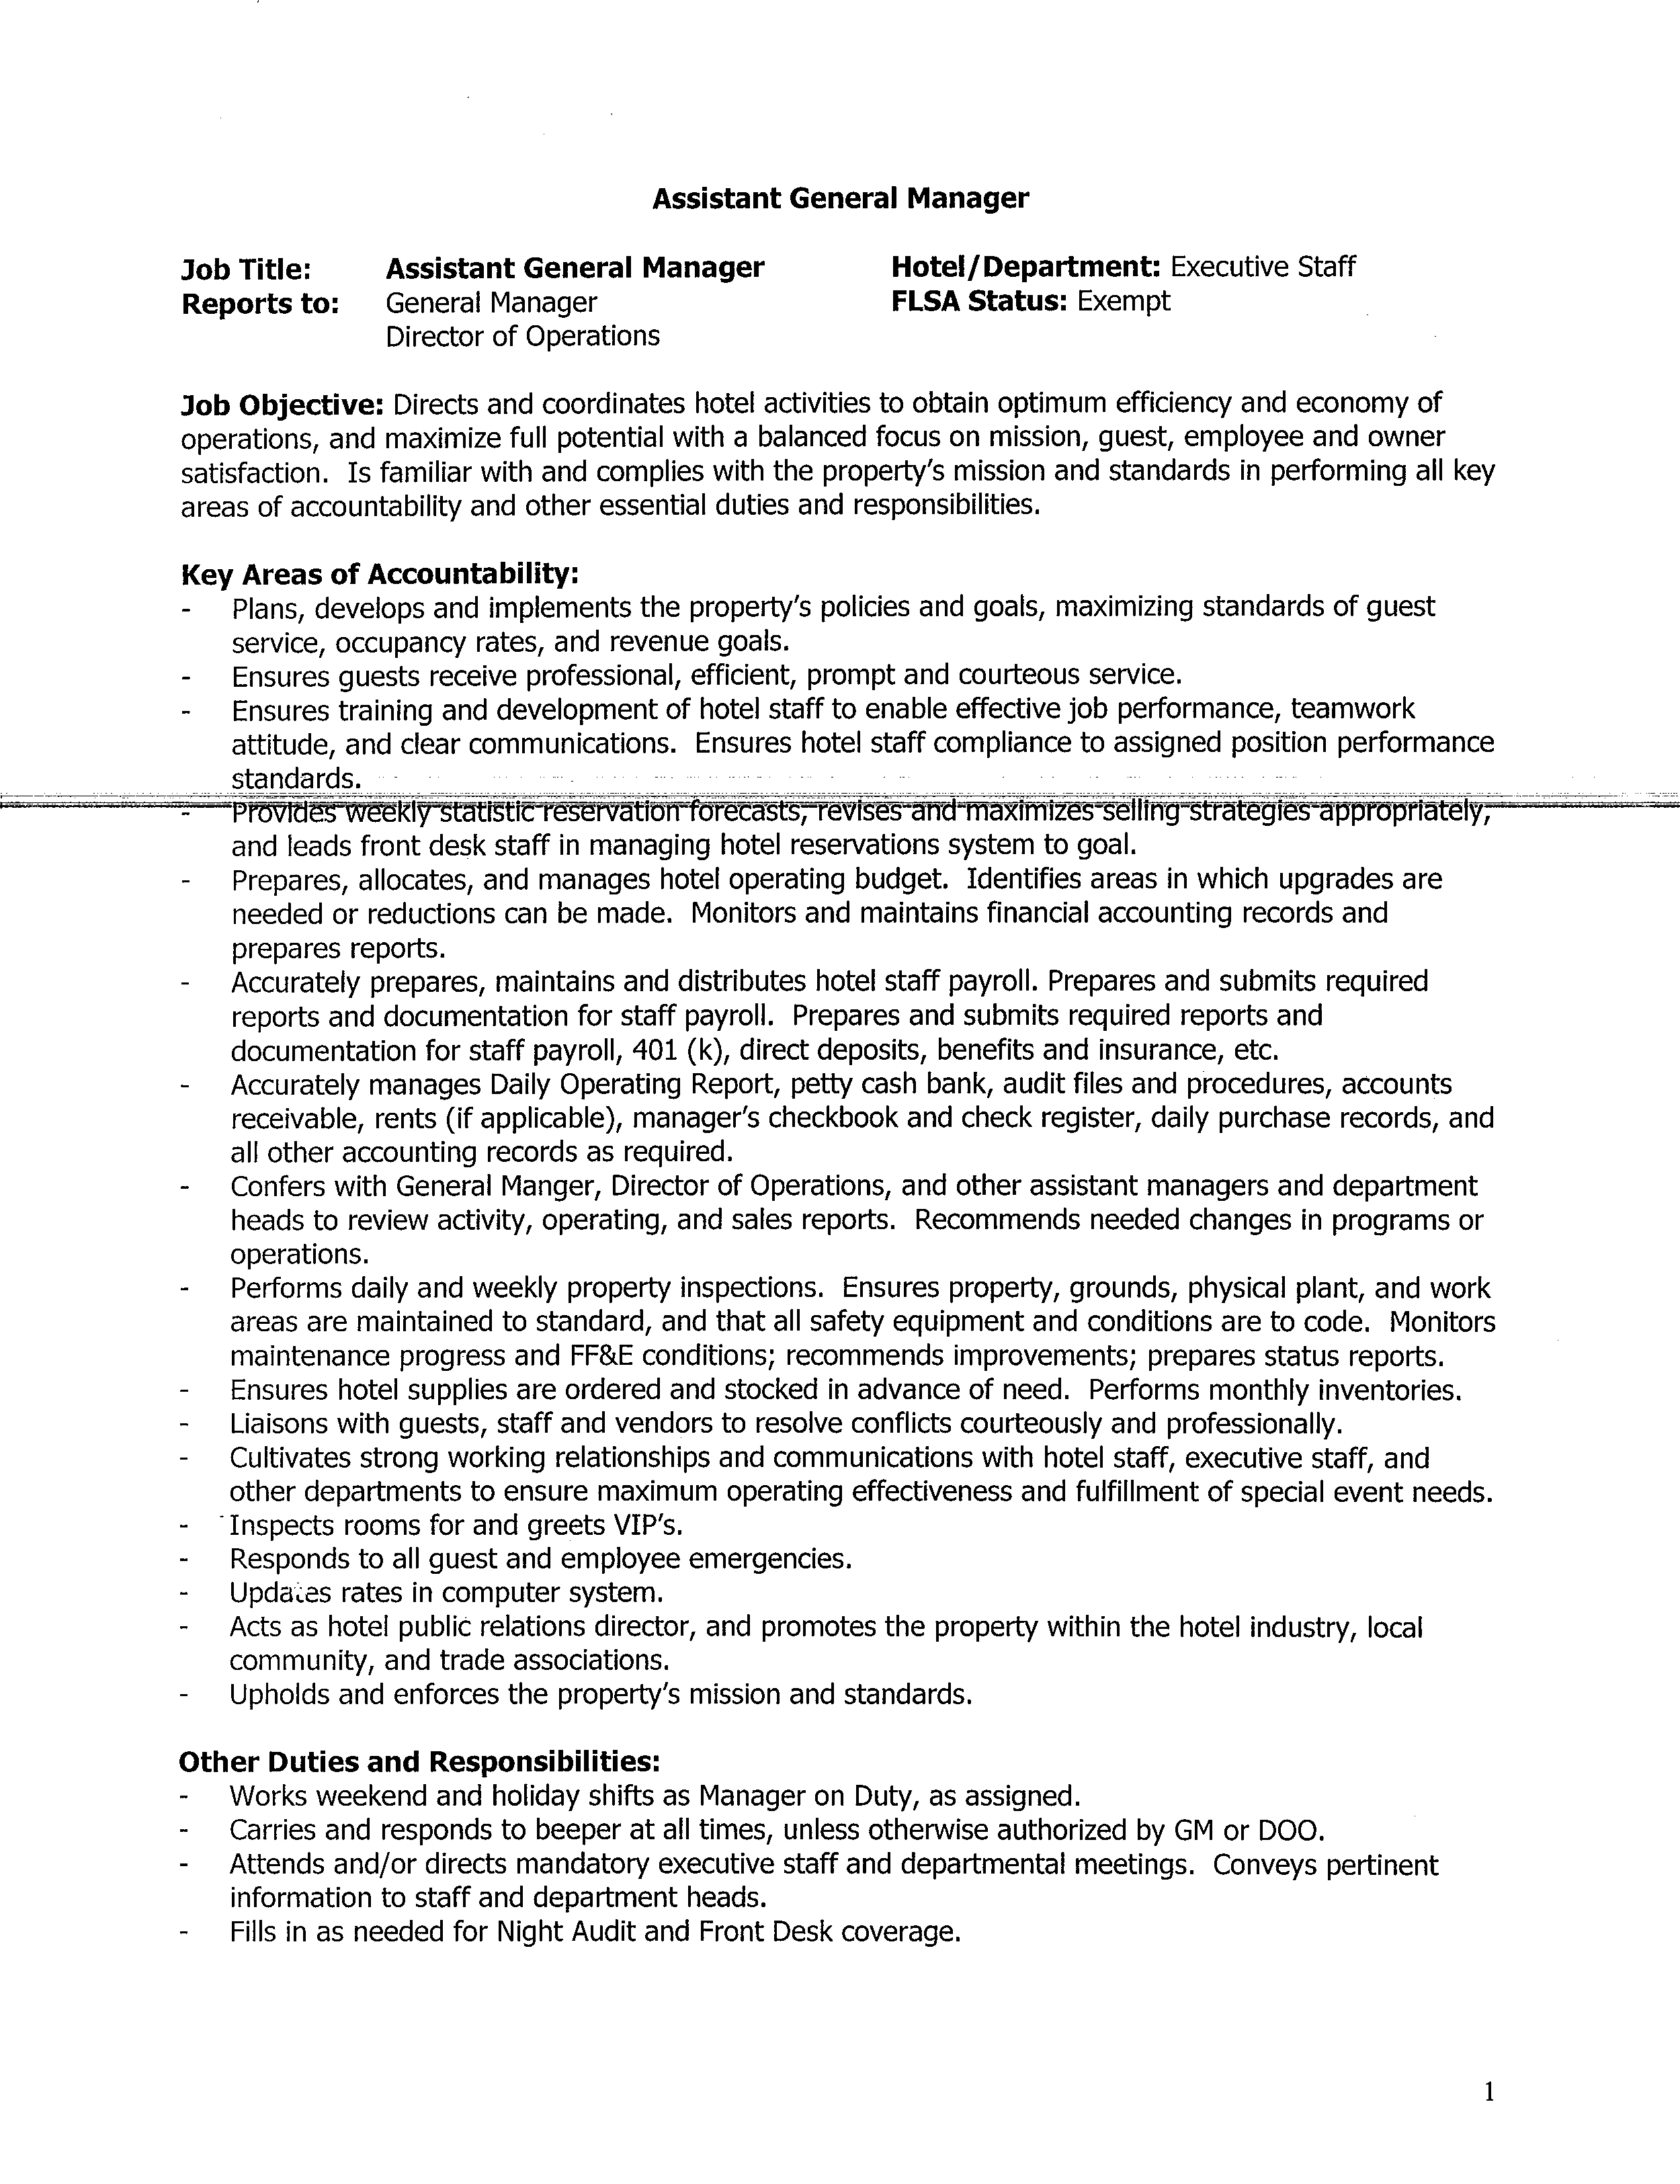 General Manager Assistant Job description template main image